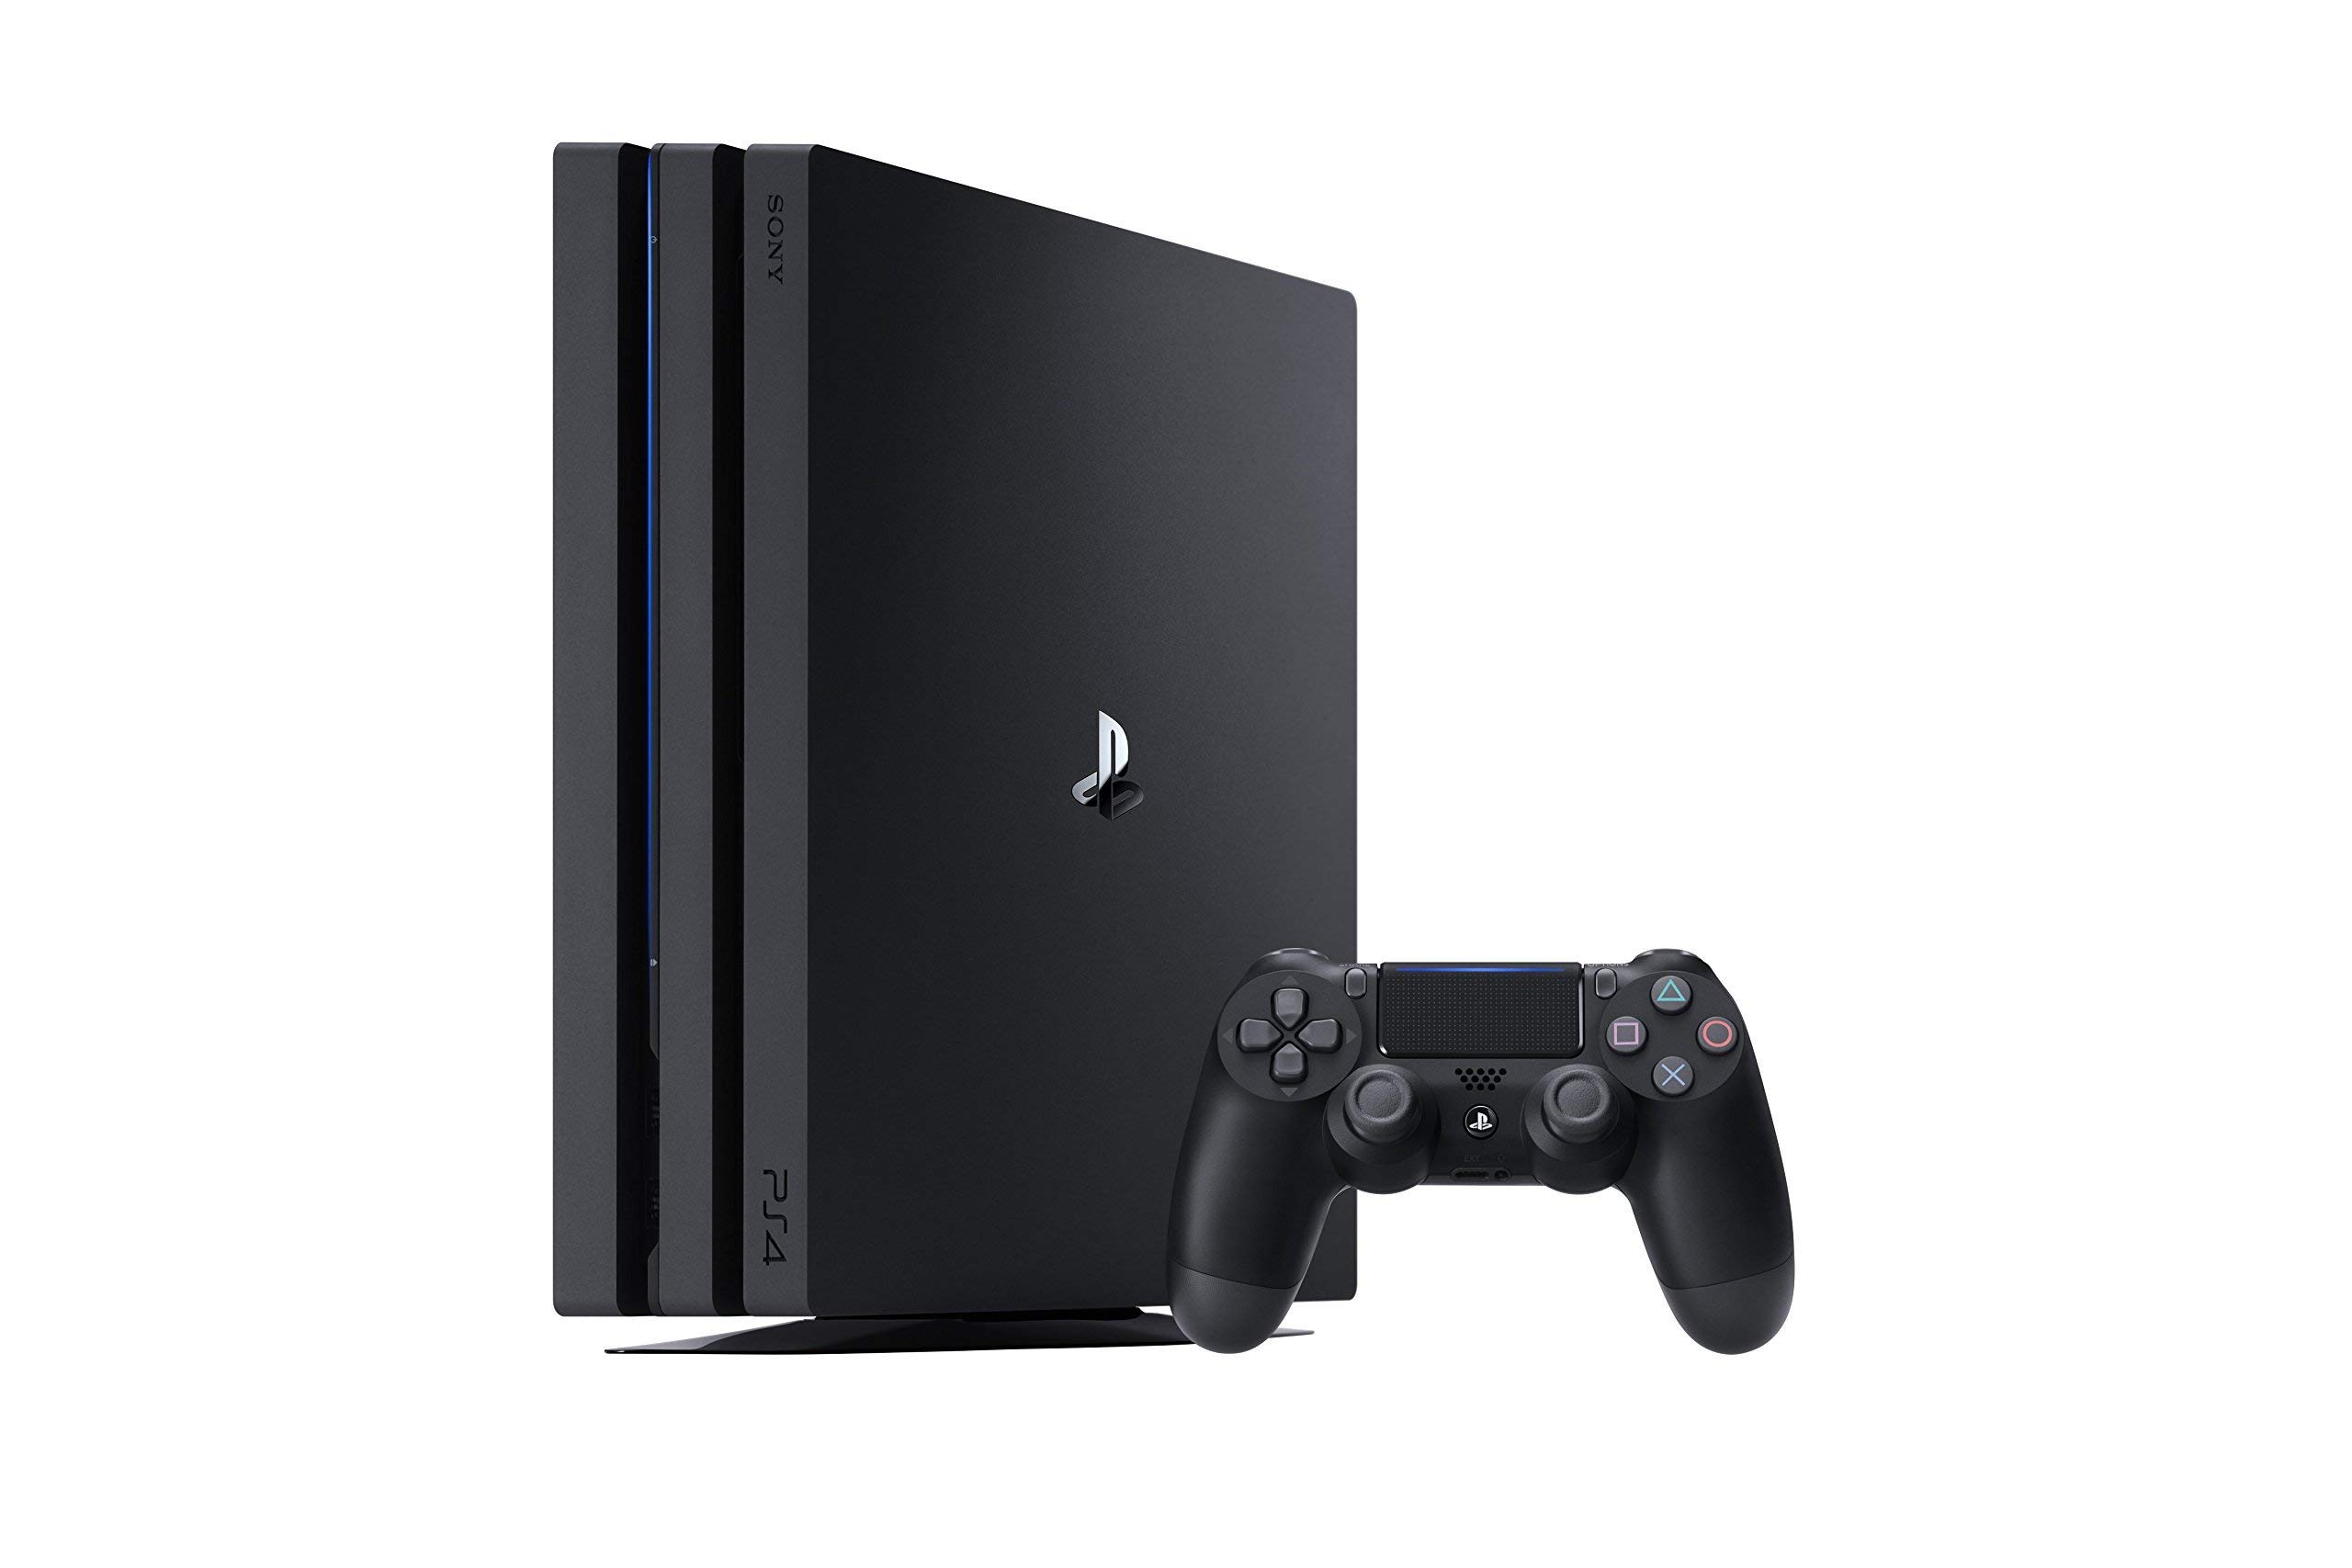 Sony PlayStation 4 Pro w/ Accessories, 1TB HDD, CUH-7215B - Jet Black (Renewed)